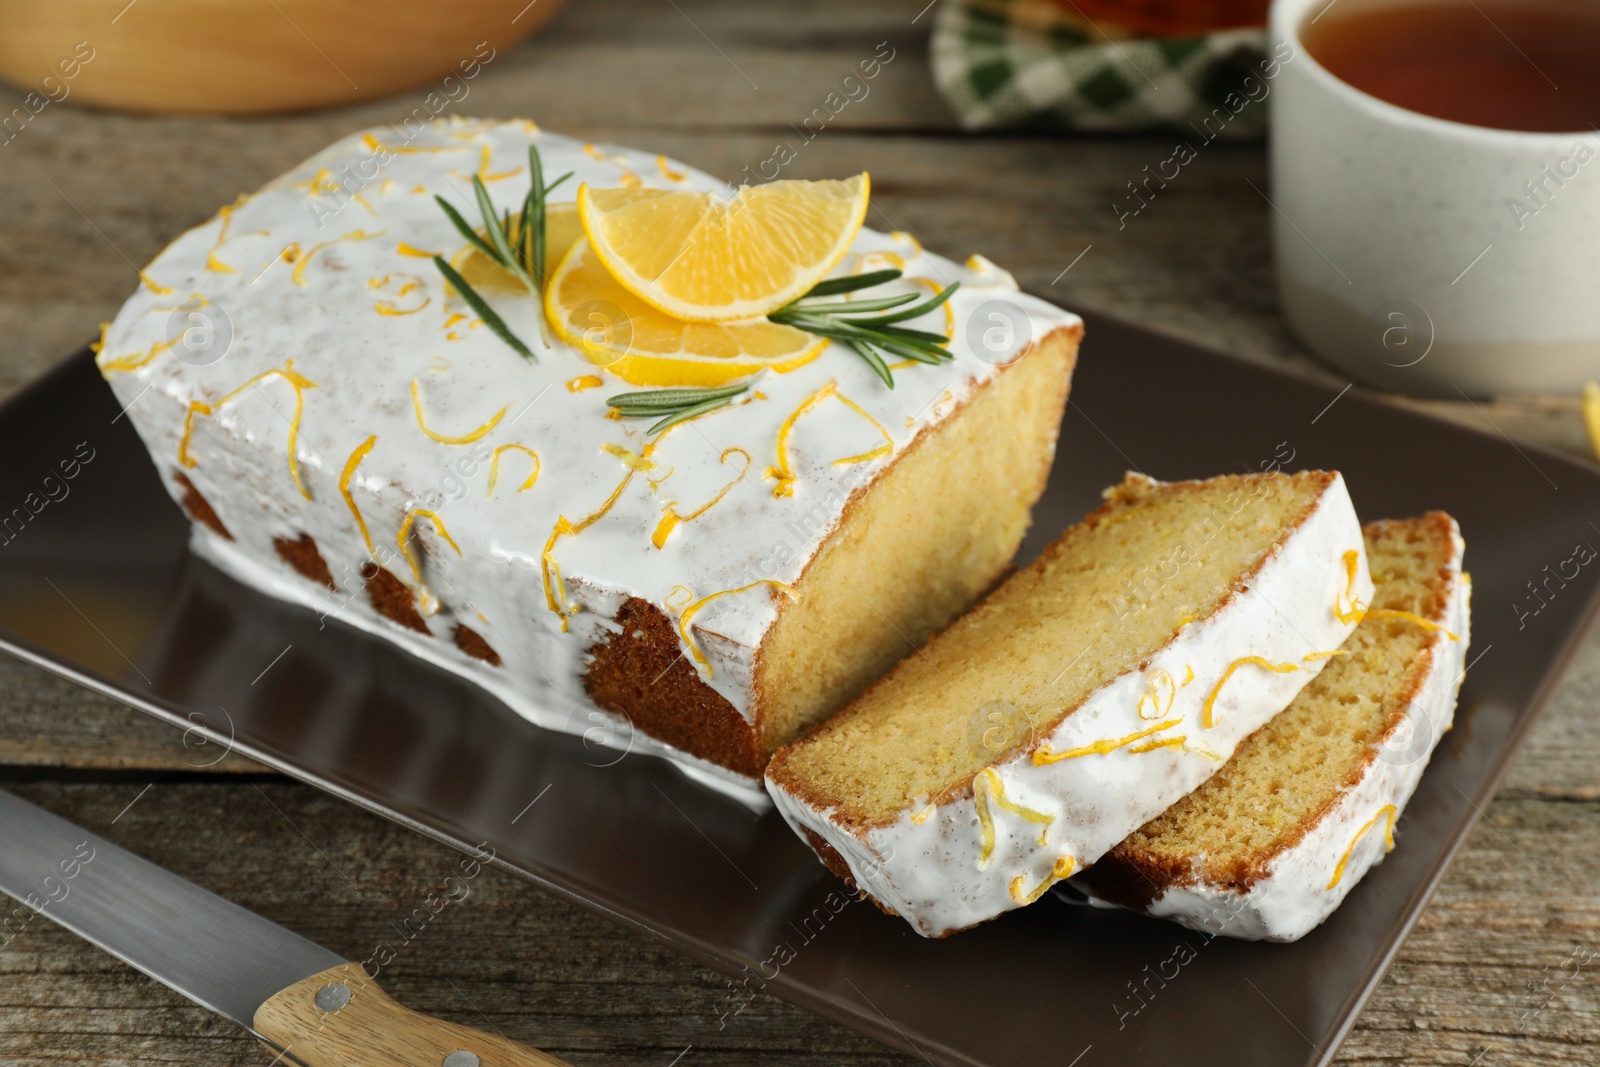 Photo of Tasty lemon cake with glaze on wooden table, closeup